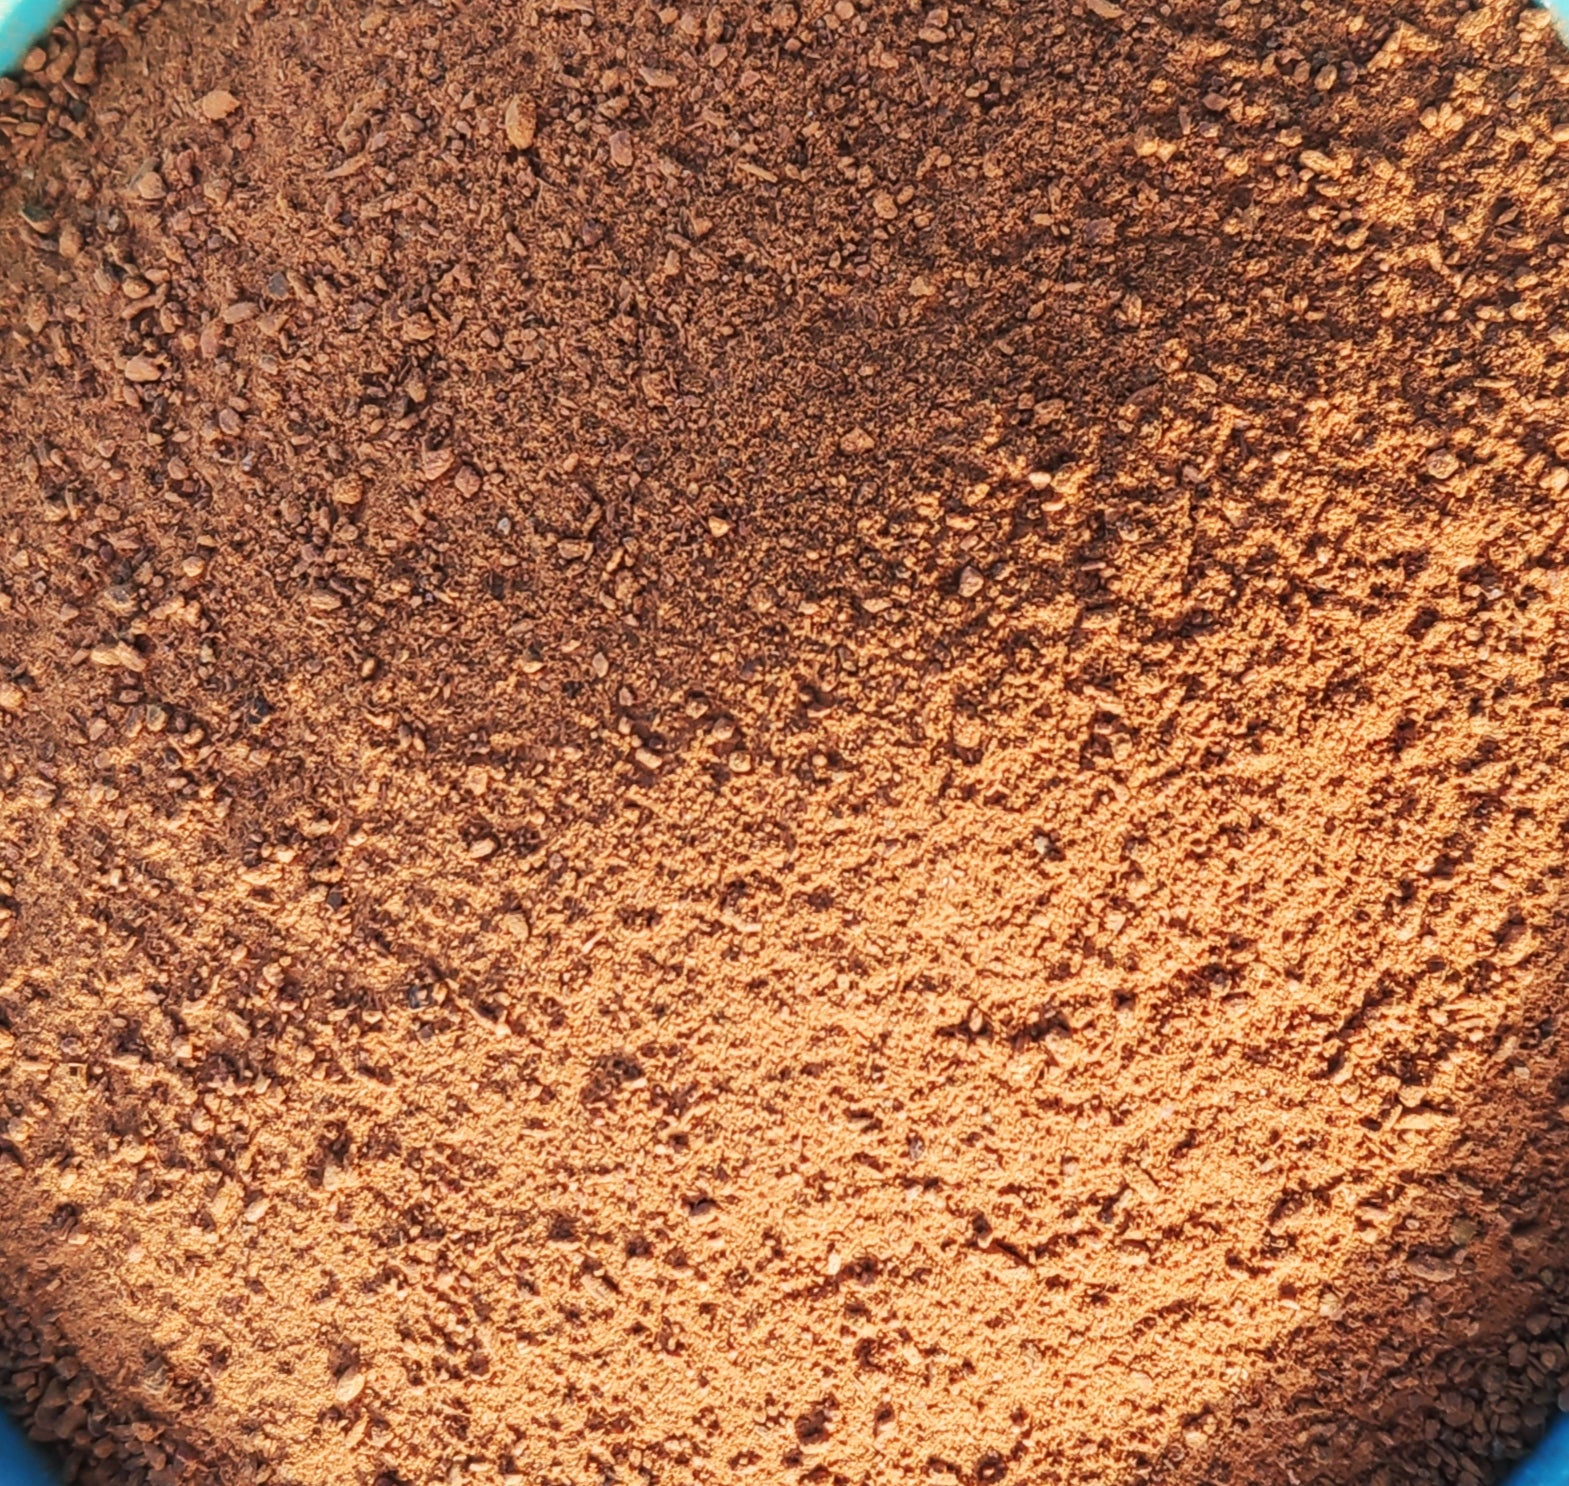 Chinese Cinnamon / Cassia Powder (Cinnamomum Cassia)